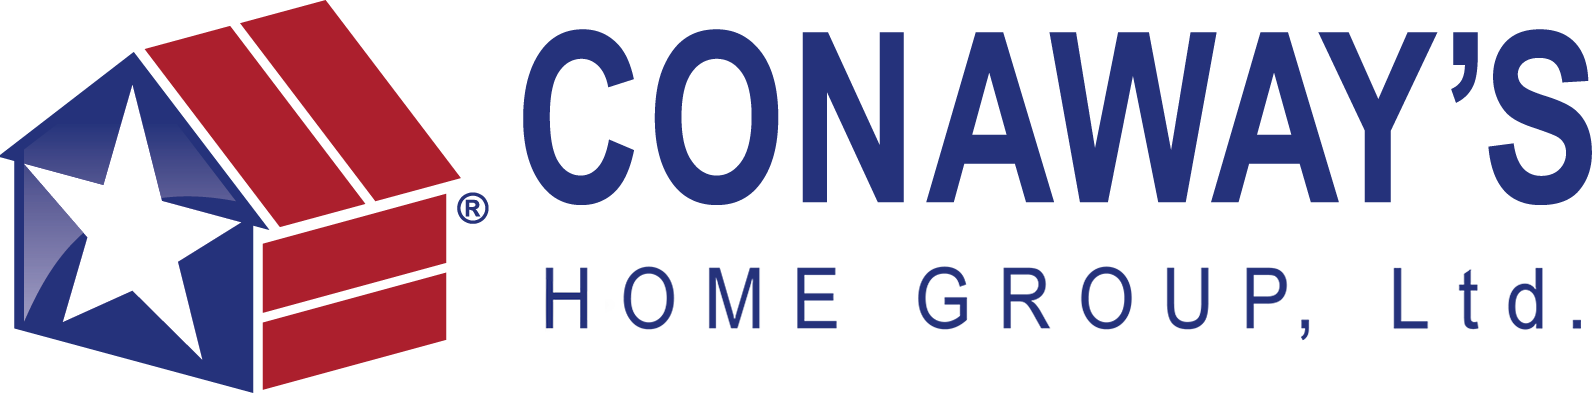 Conaway’s Home Group Logo